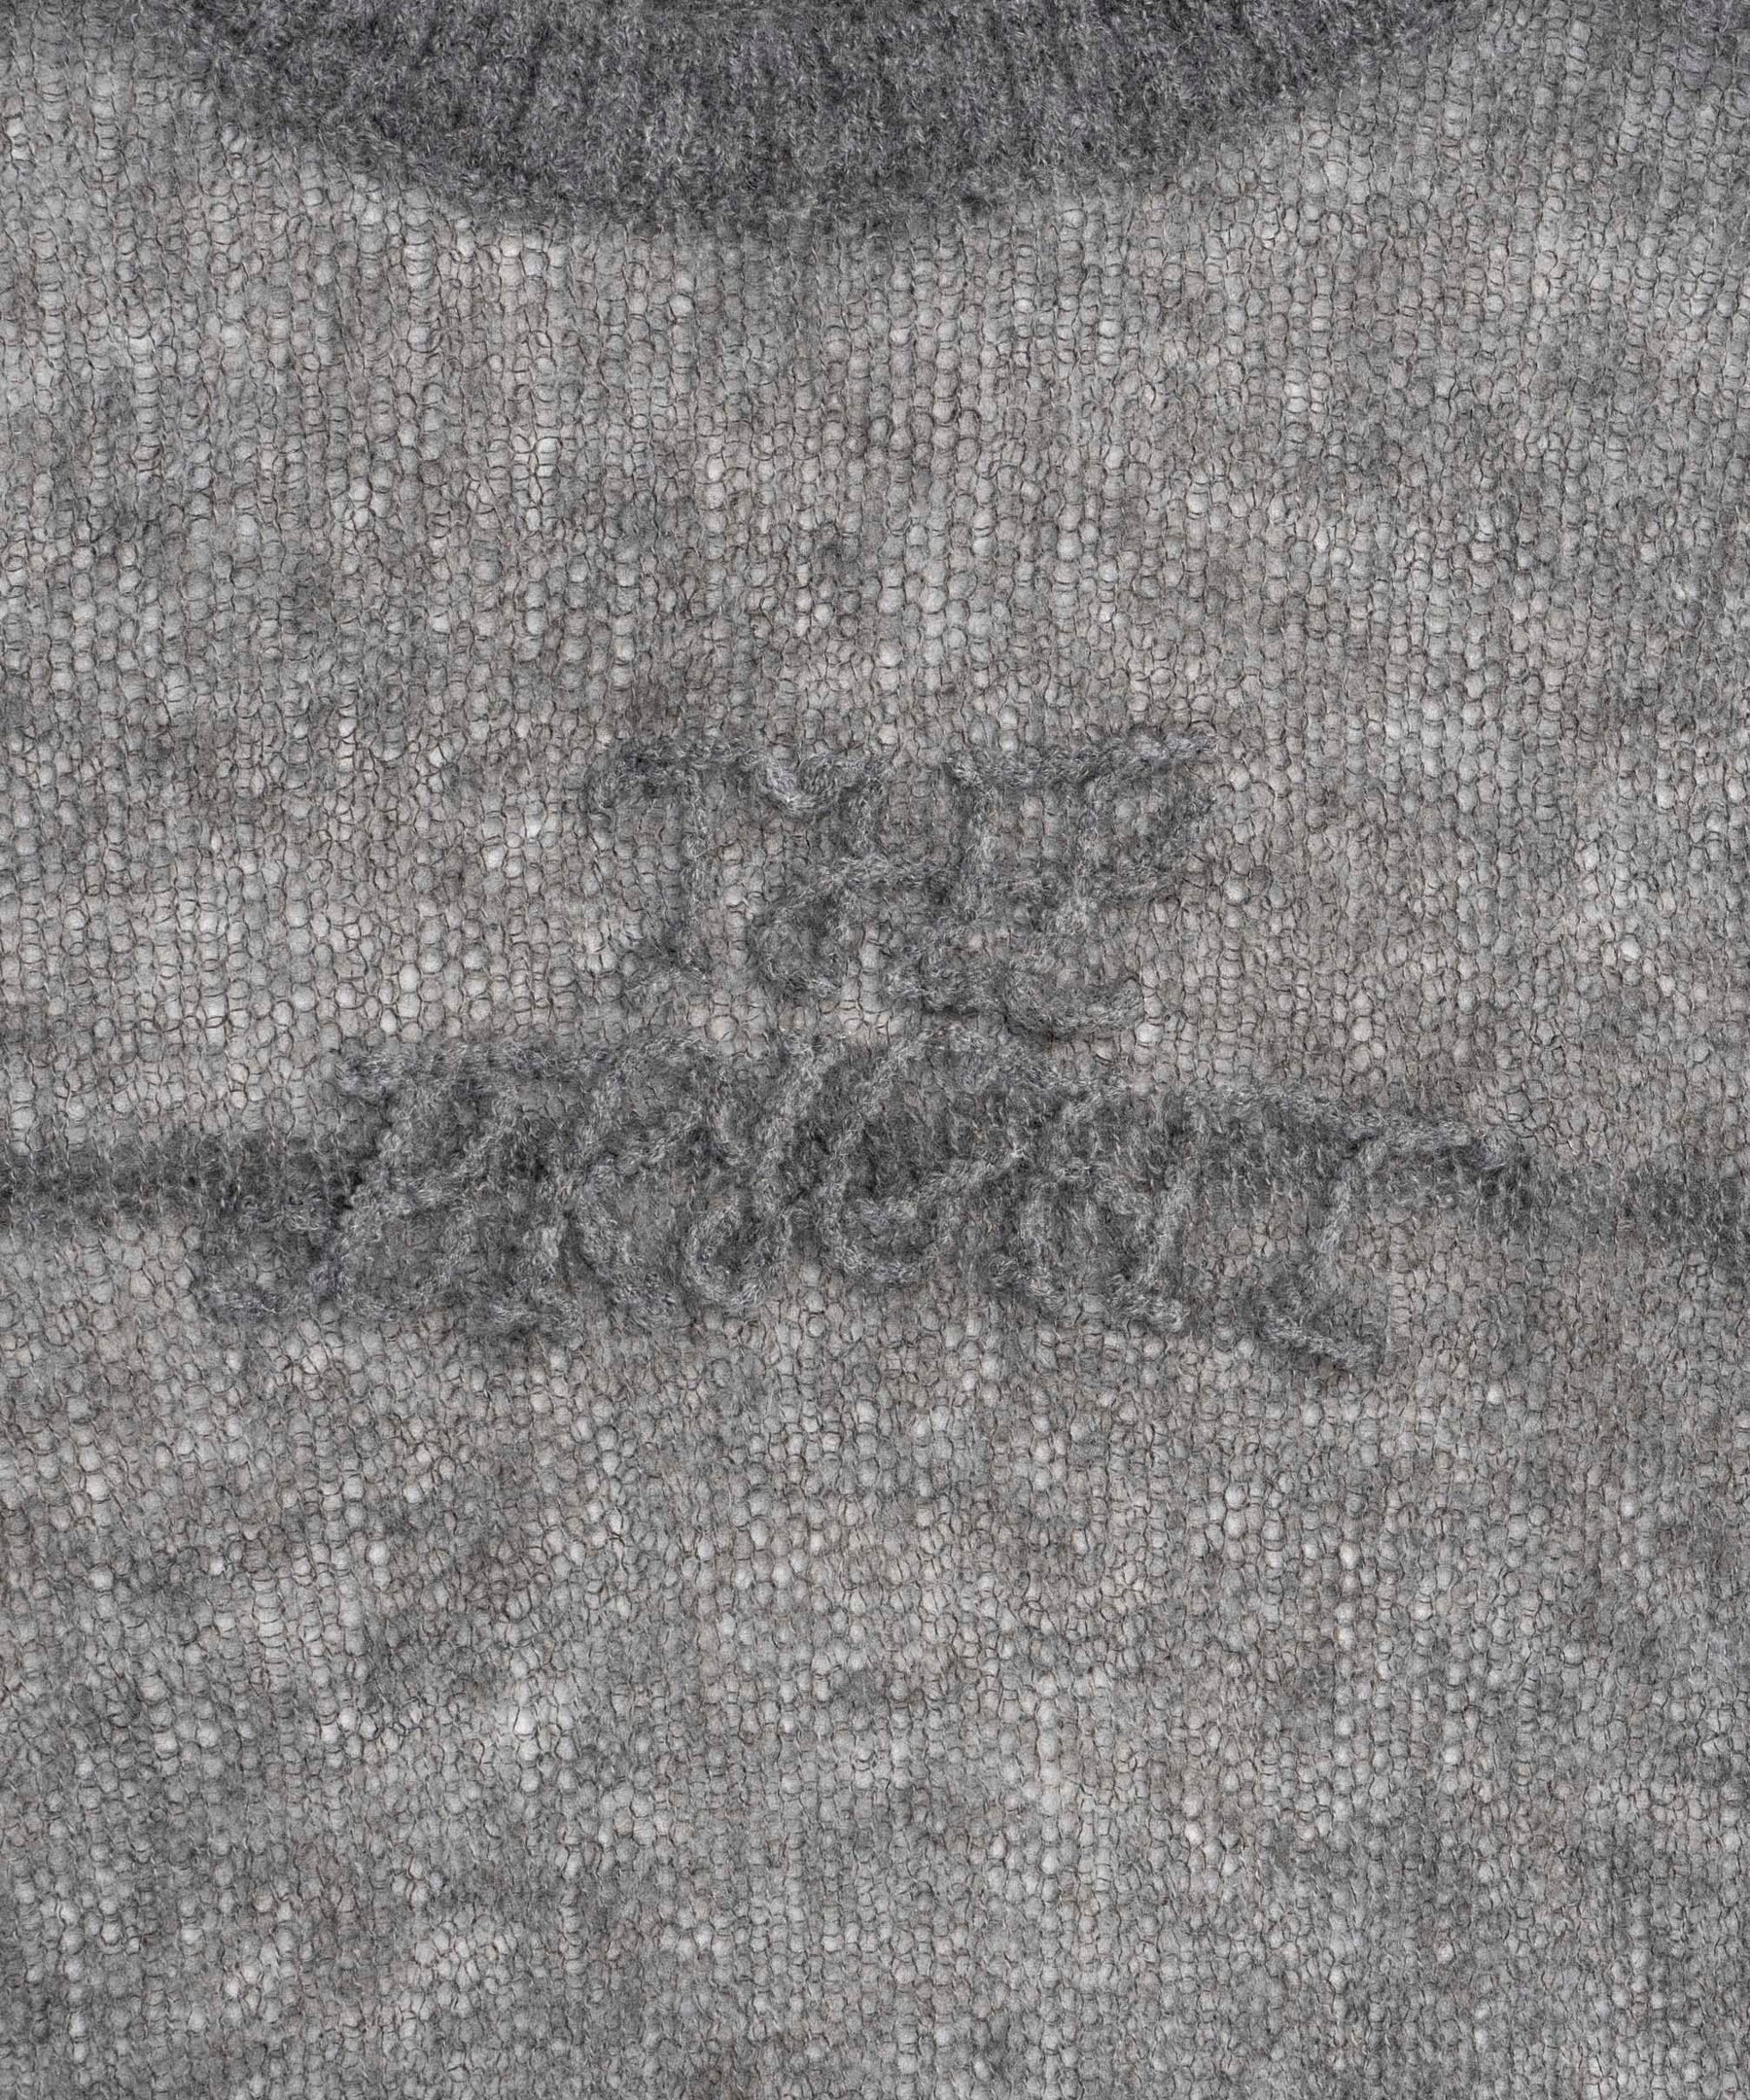 【24AUTUMN PRE-ORDER】Bright Logo Sheer Knitwear